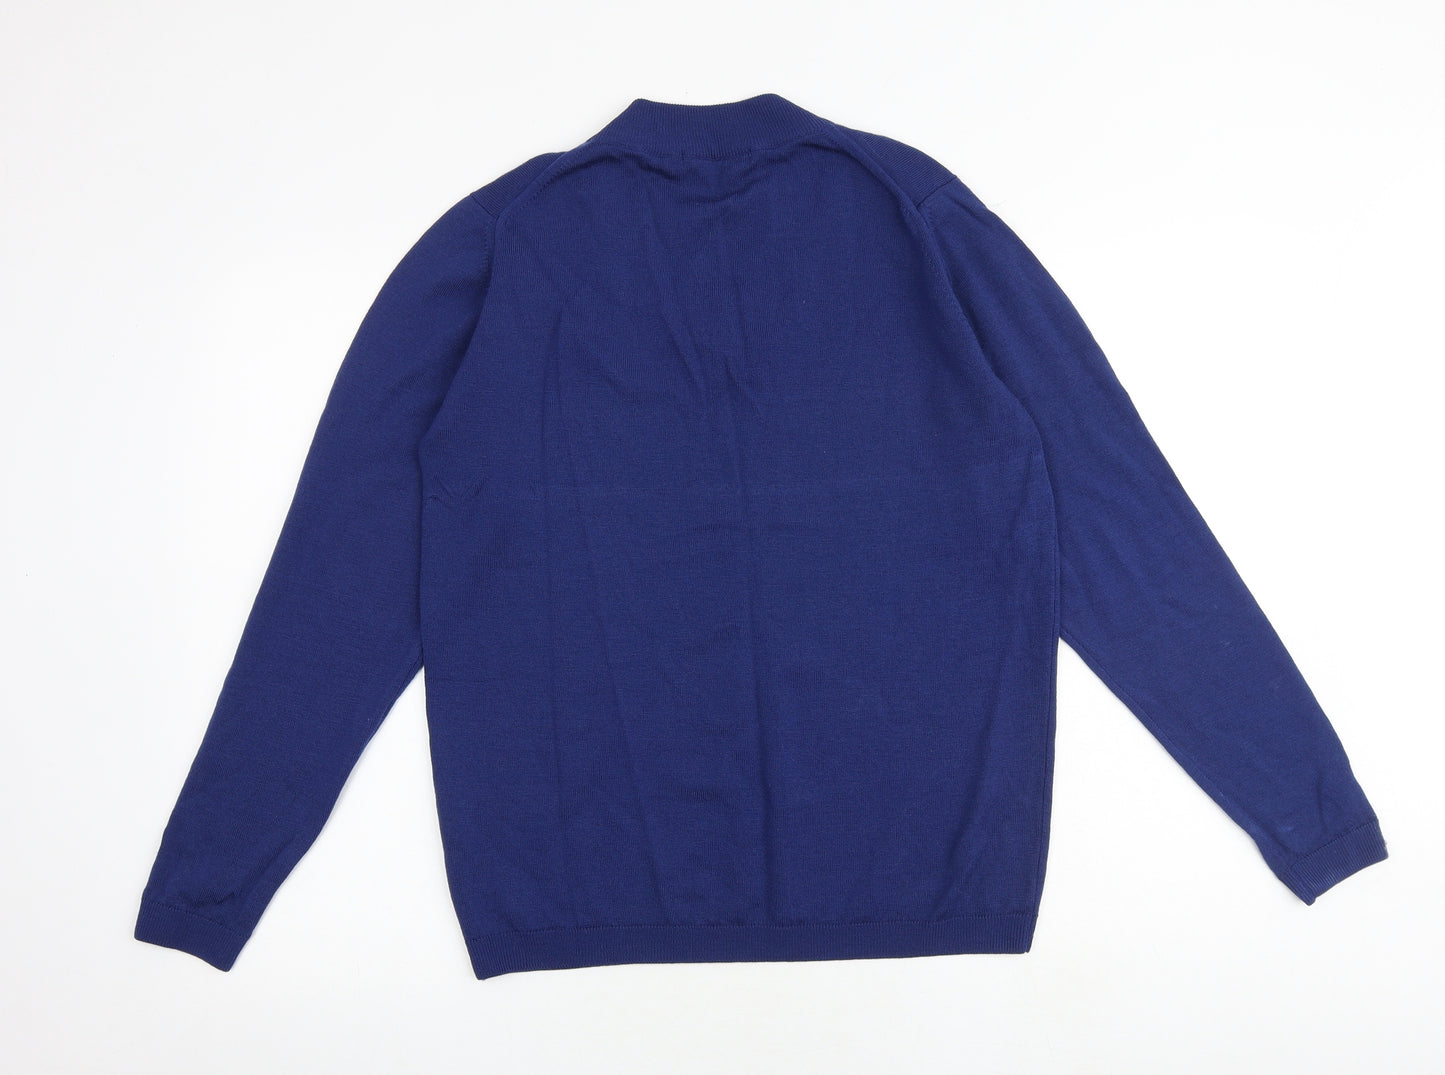 EWM Womens Blue V-Neck Wool Pullover Jumper Size 14 - Size 14-16